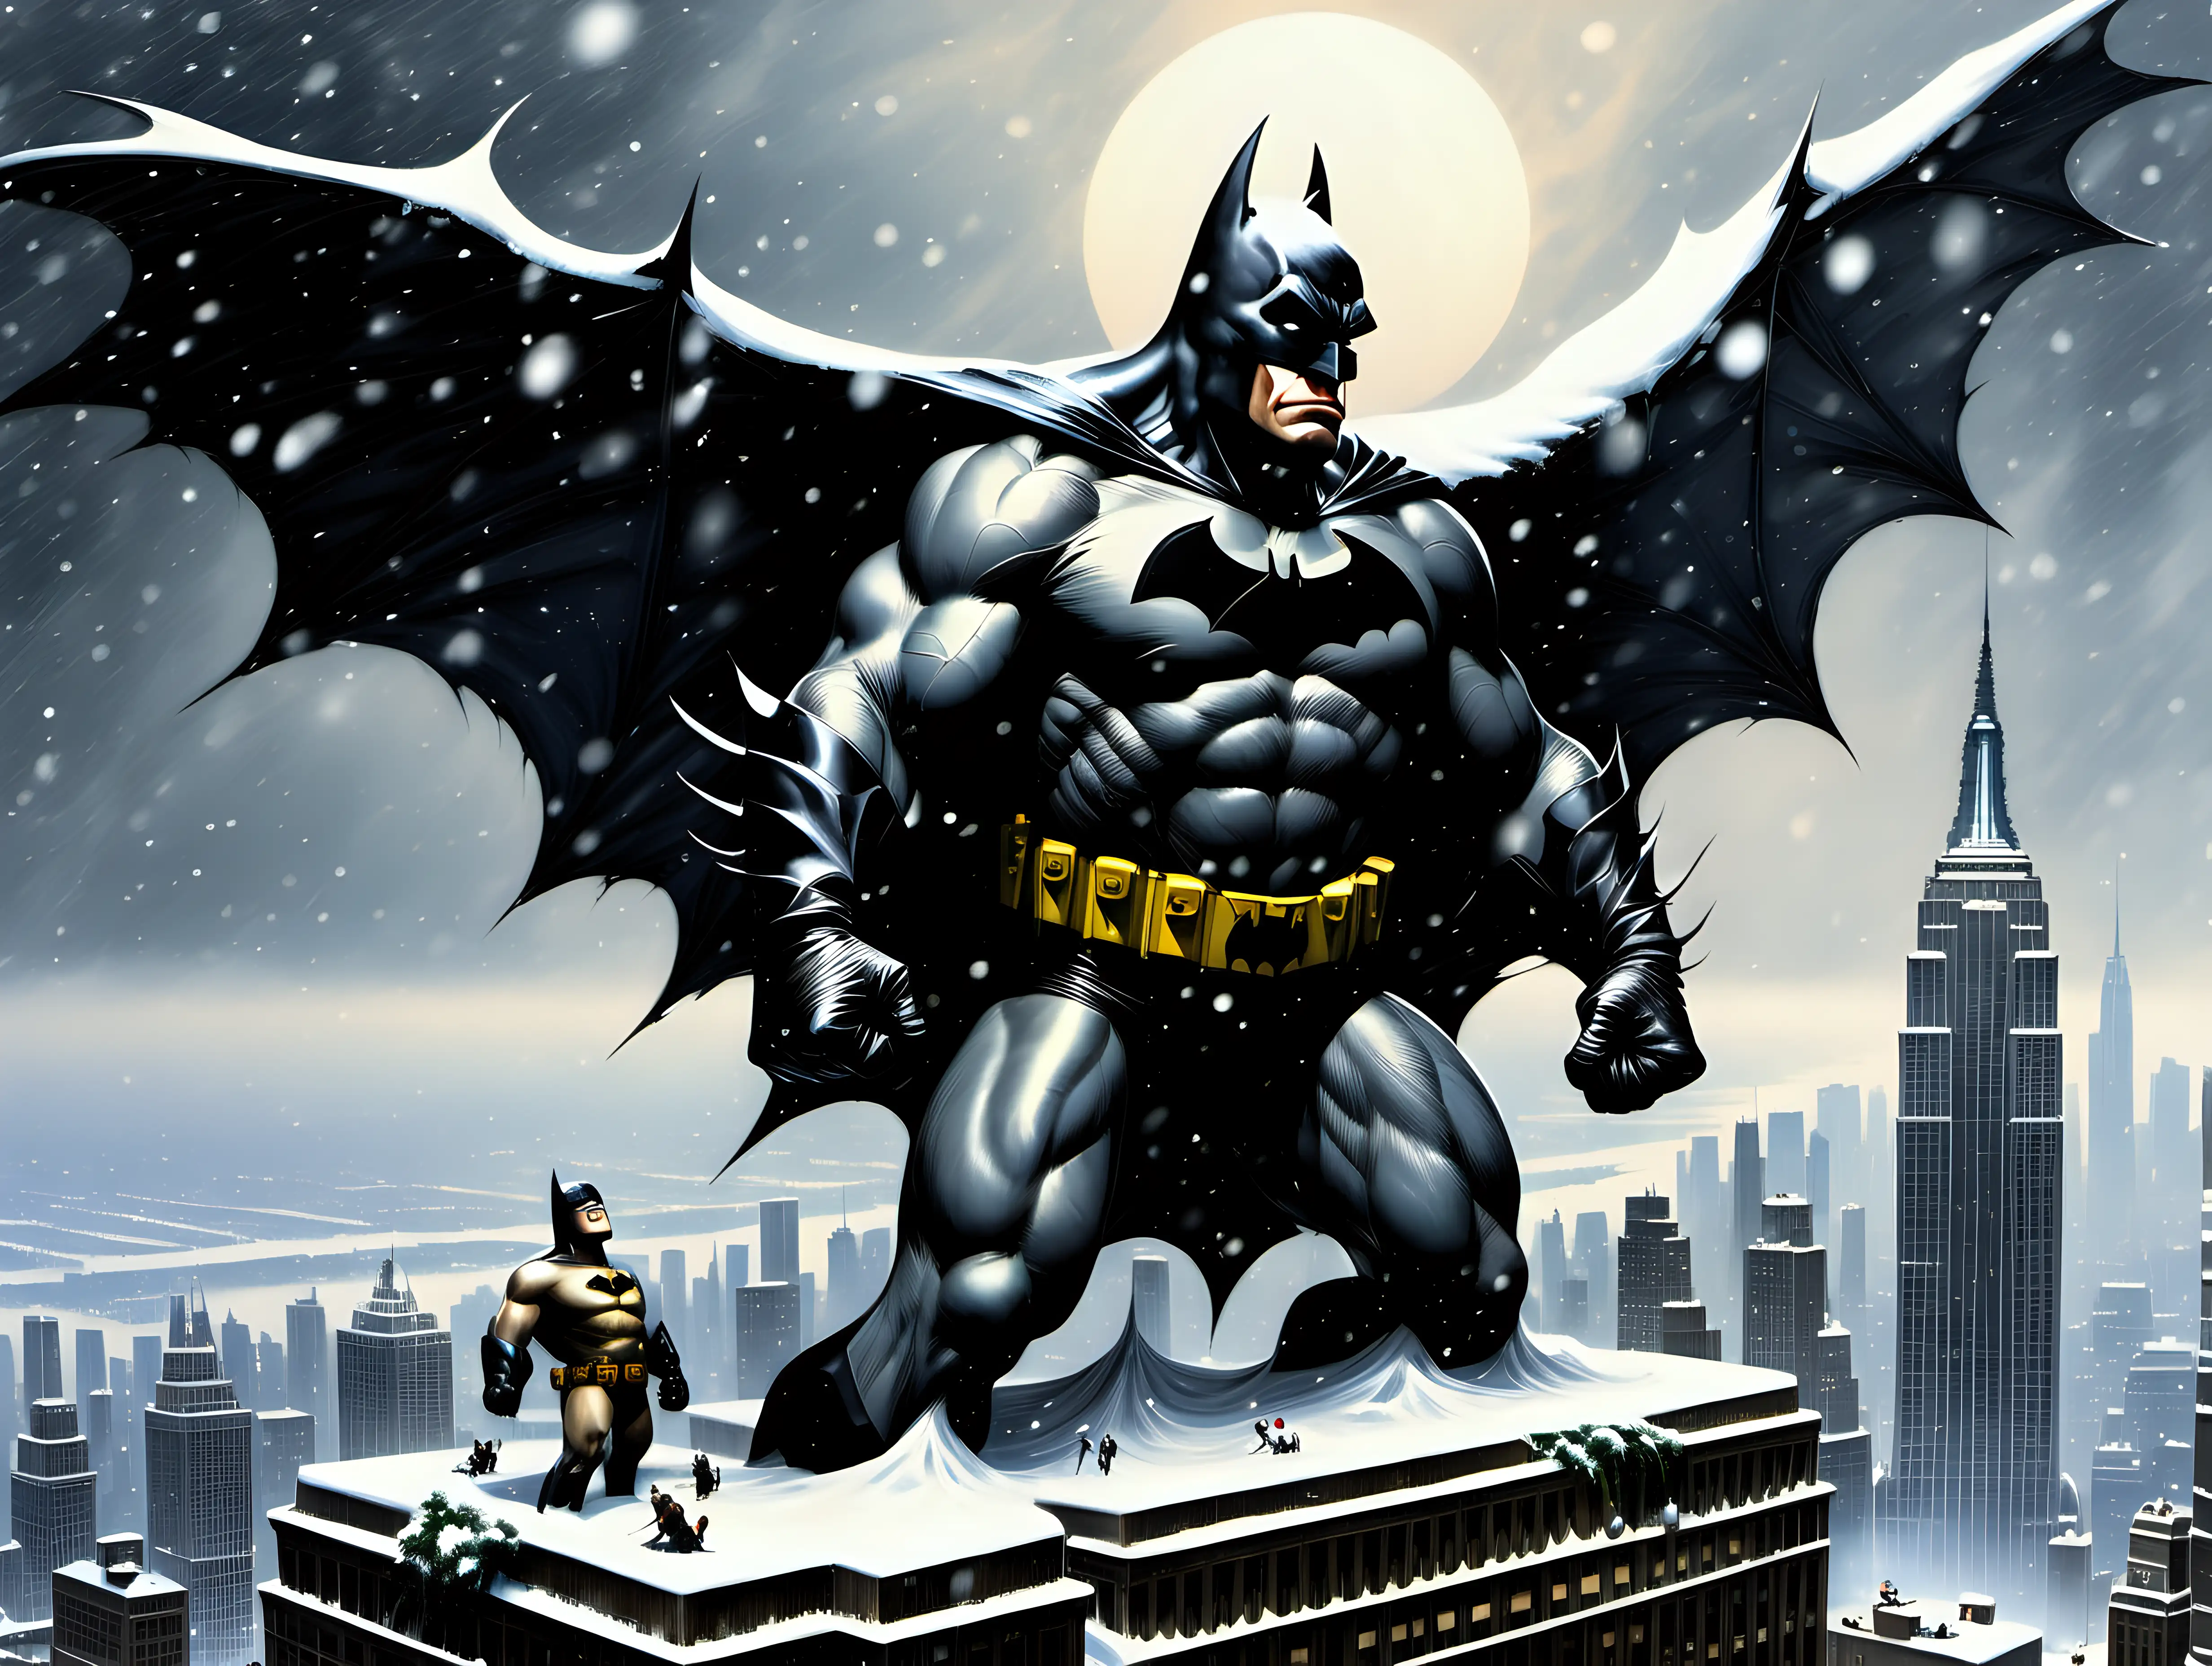 Batman and King Kong Battle atop Empire State in Snowstorm Frank Frazetta Inspired Art